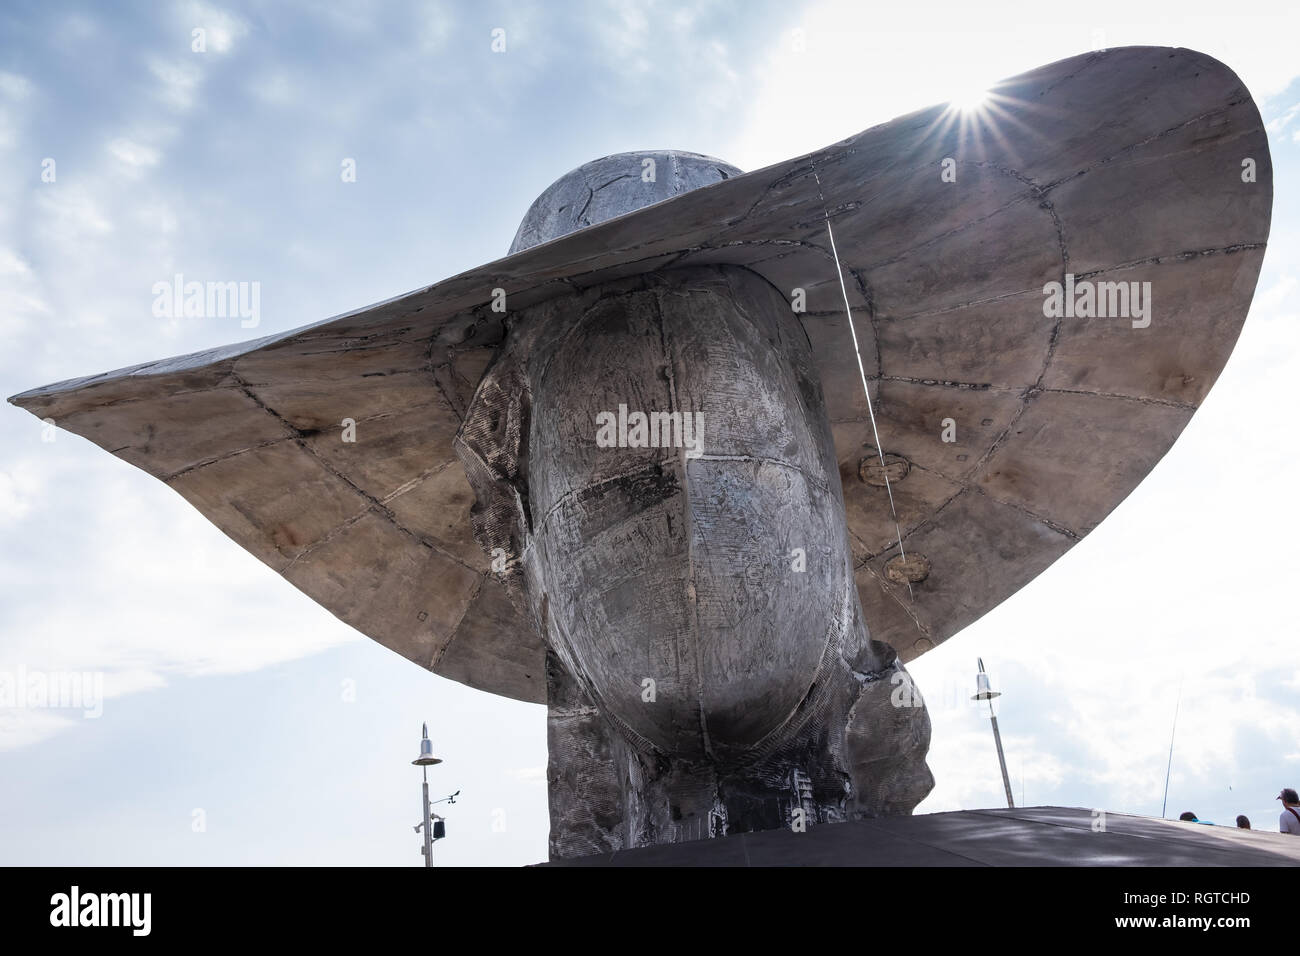 TONFANO, LUCCA, ITALY - AUGUST 13, 2018: Artist Manolo Valdés, a monumental work on the Tonfano pier: this is the 2015 aluminum sculpture 'La pamela' Stock Photo